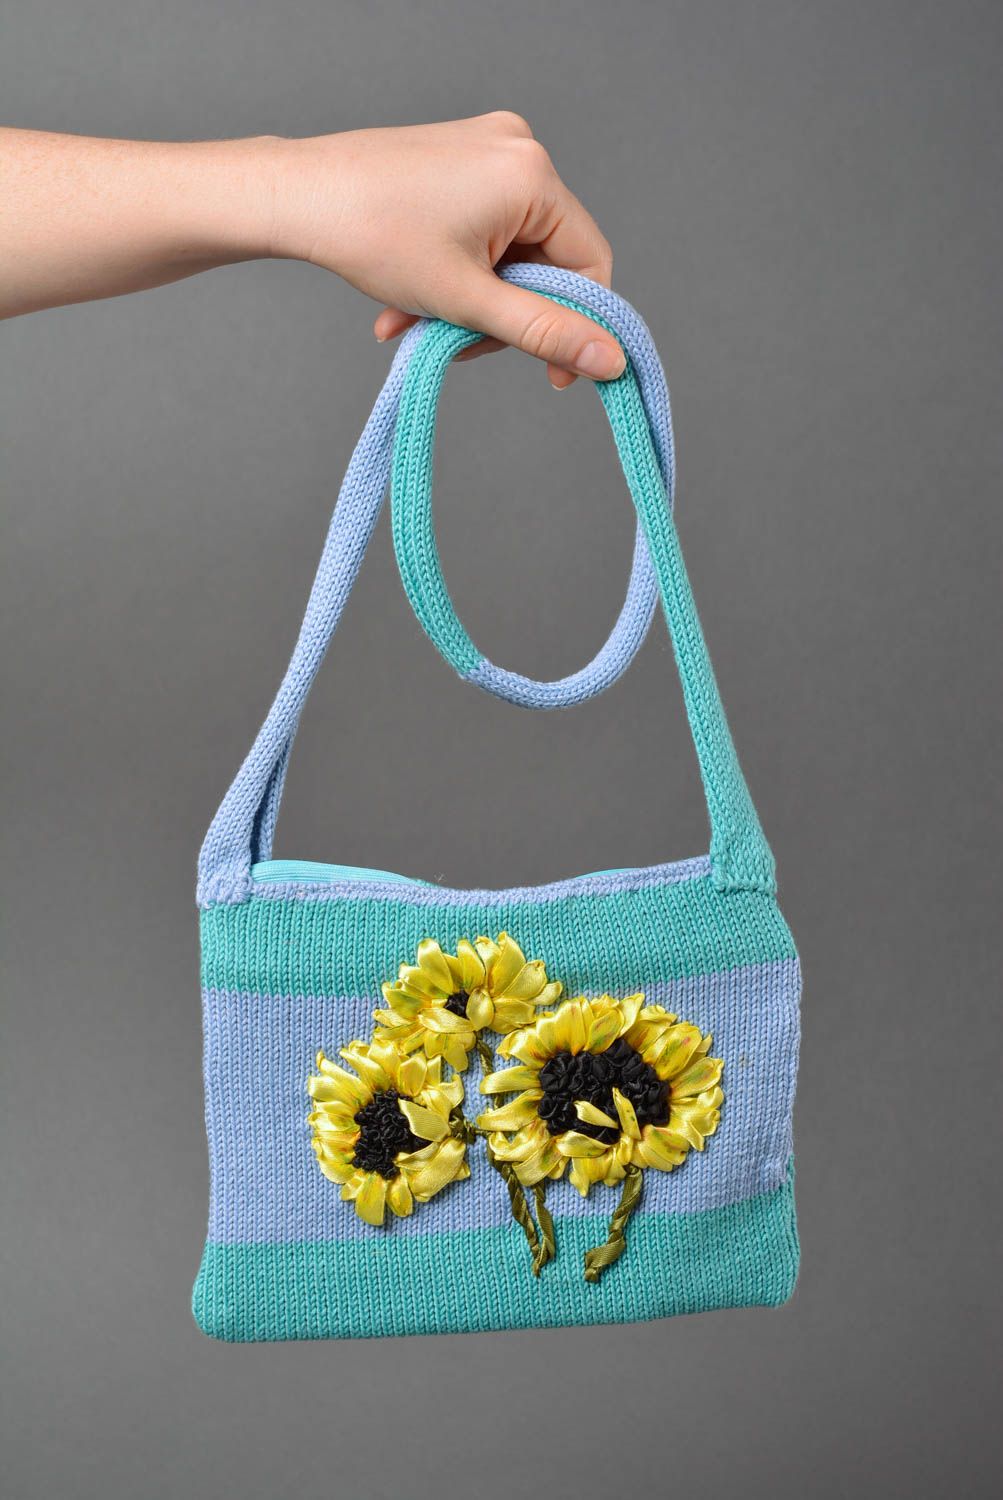 Stylish handmade handbag designs knitted bag shoulder bag accessories for girls photo 3